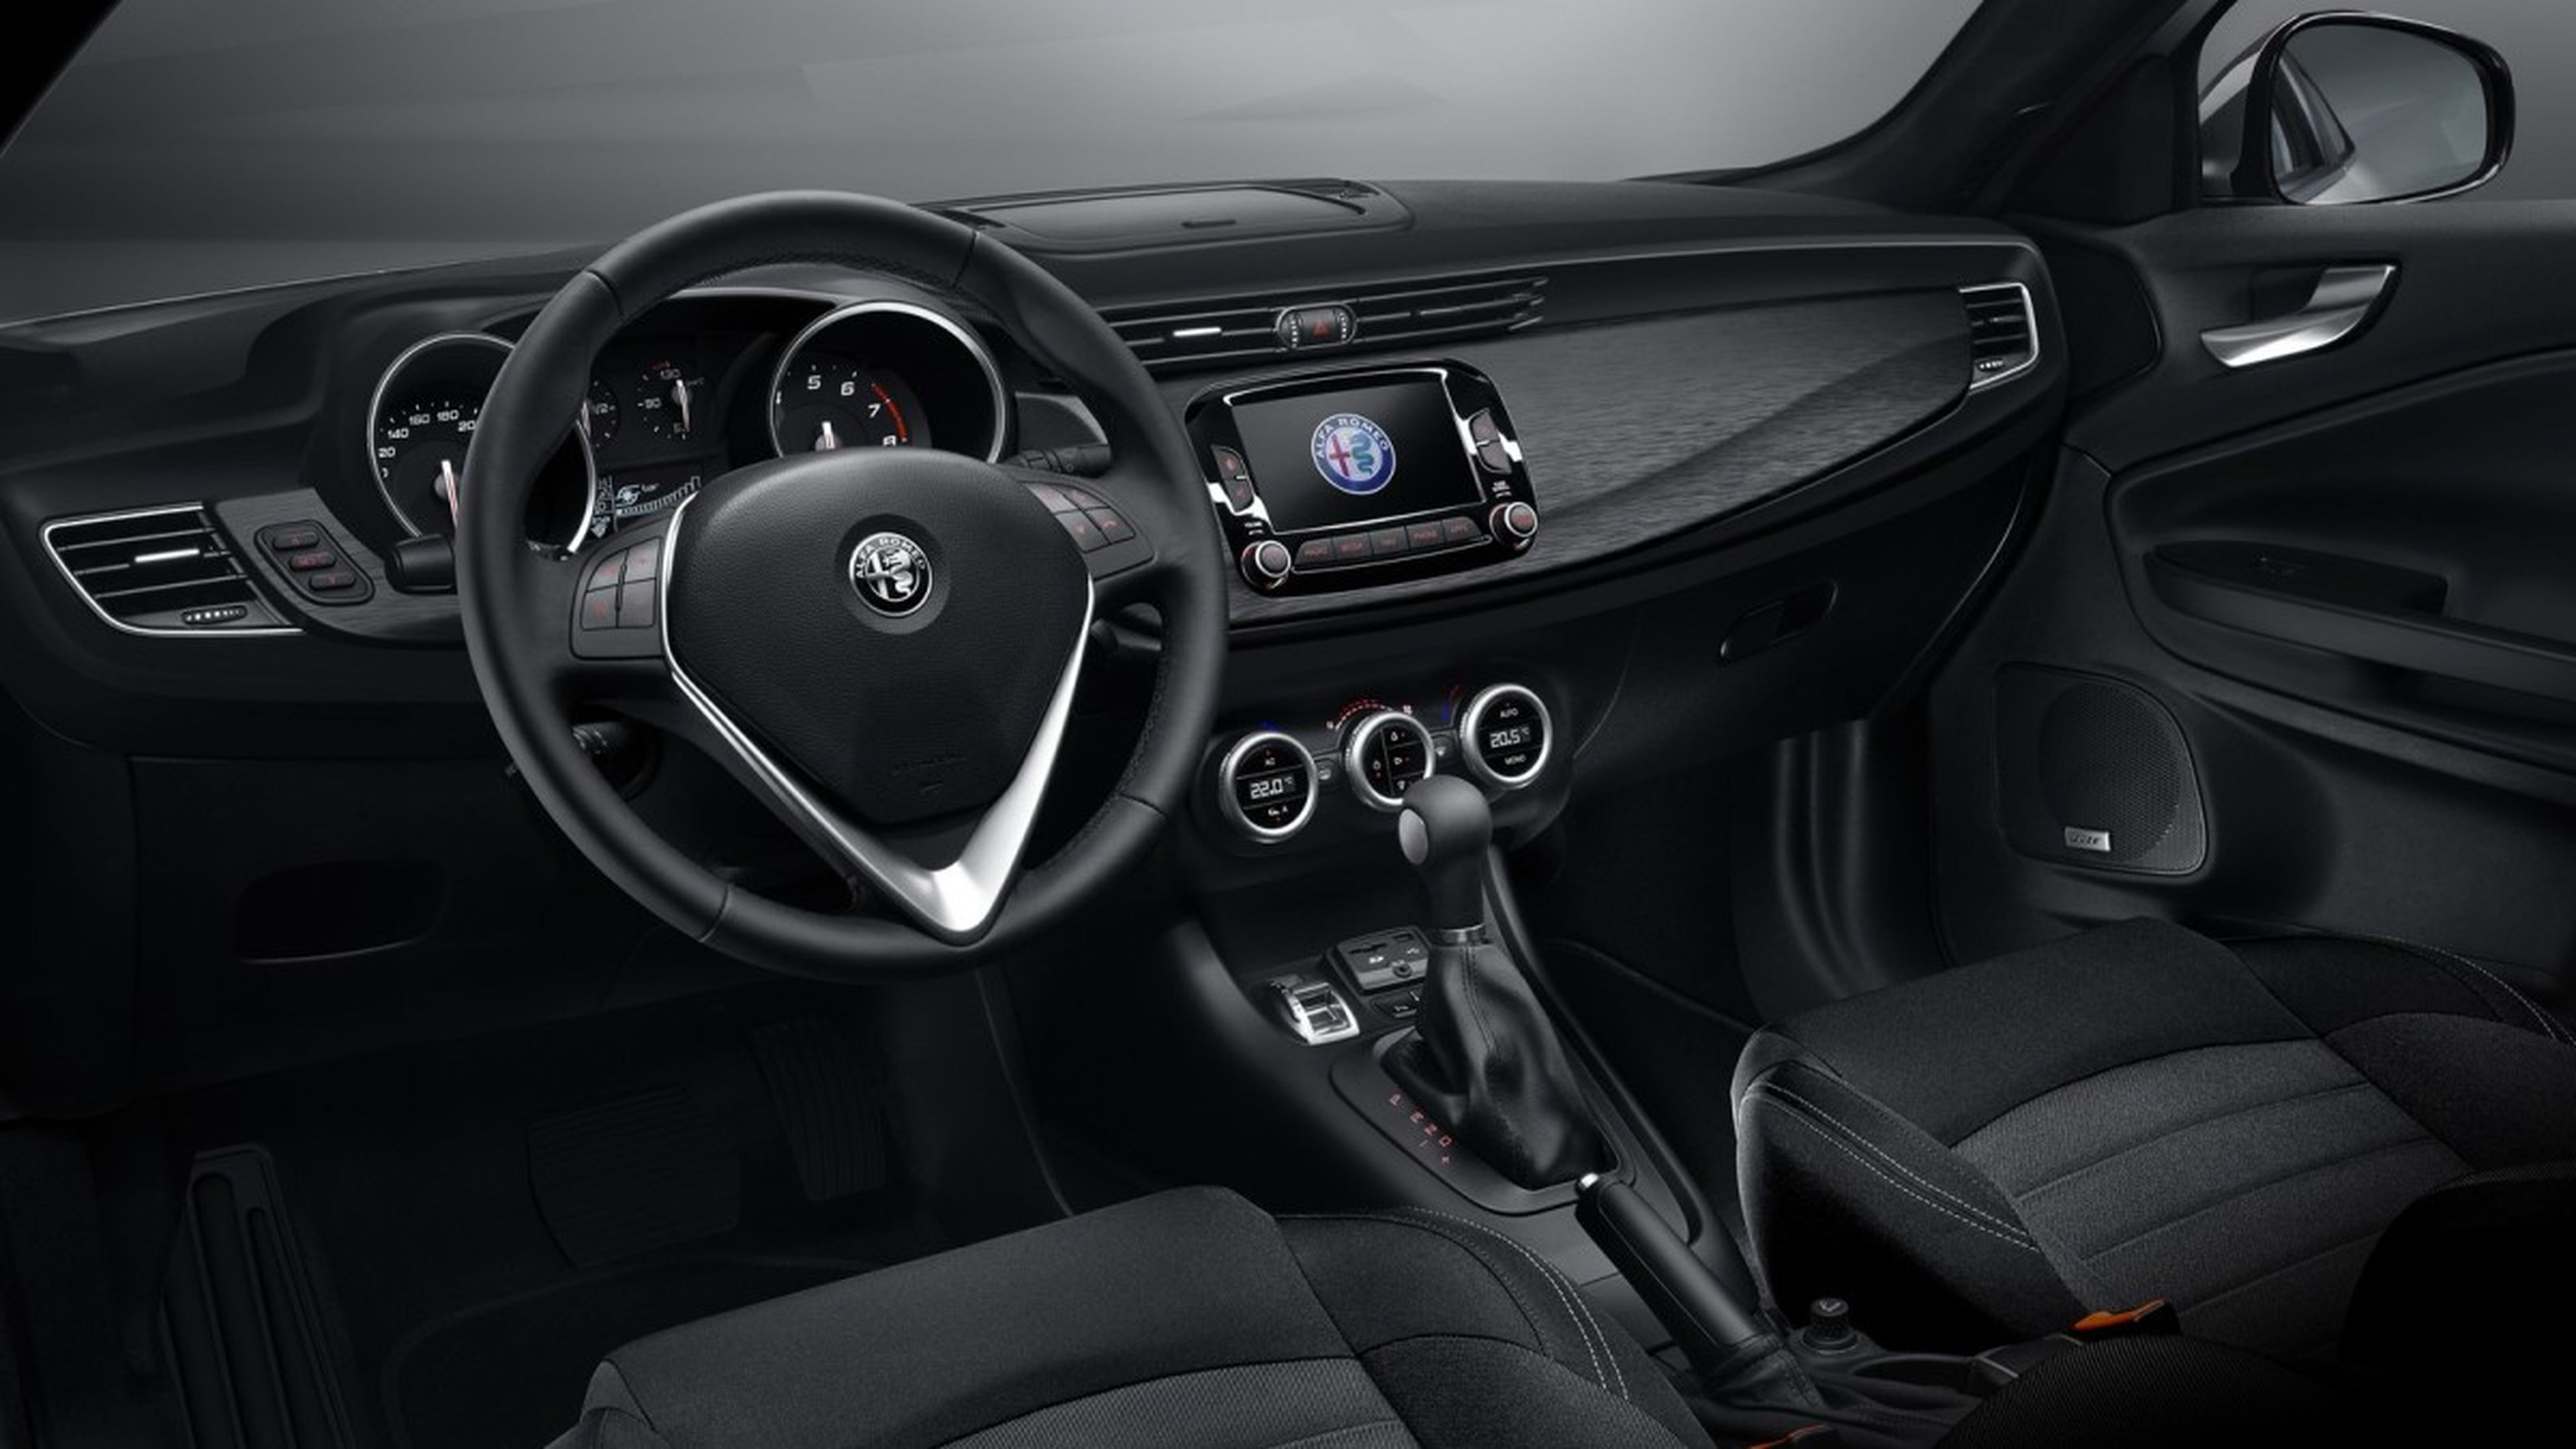 Alfa Romeo Giulietta 2016 interior